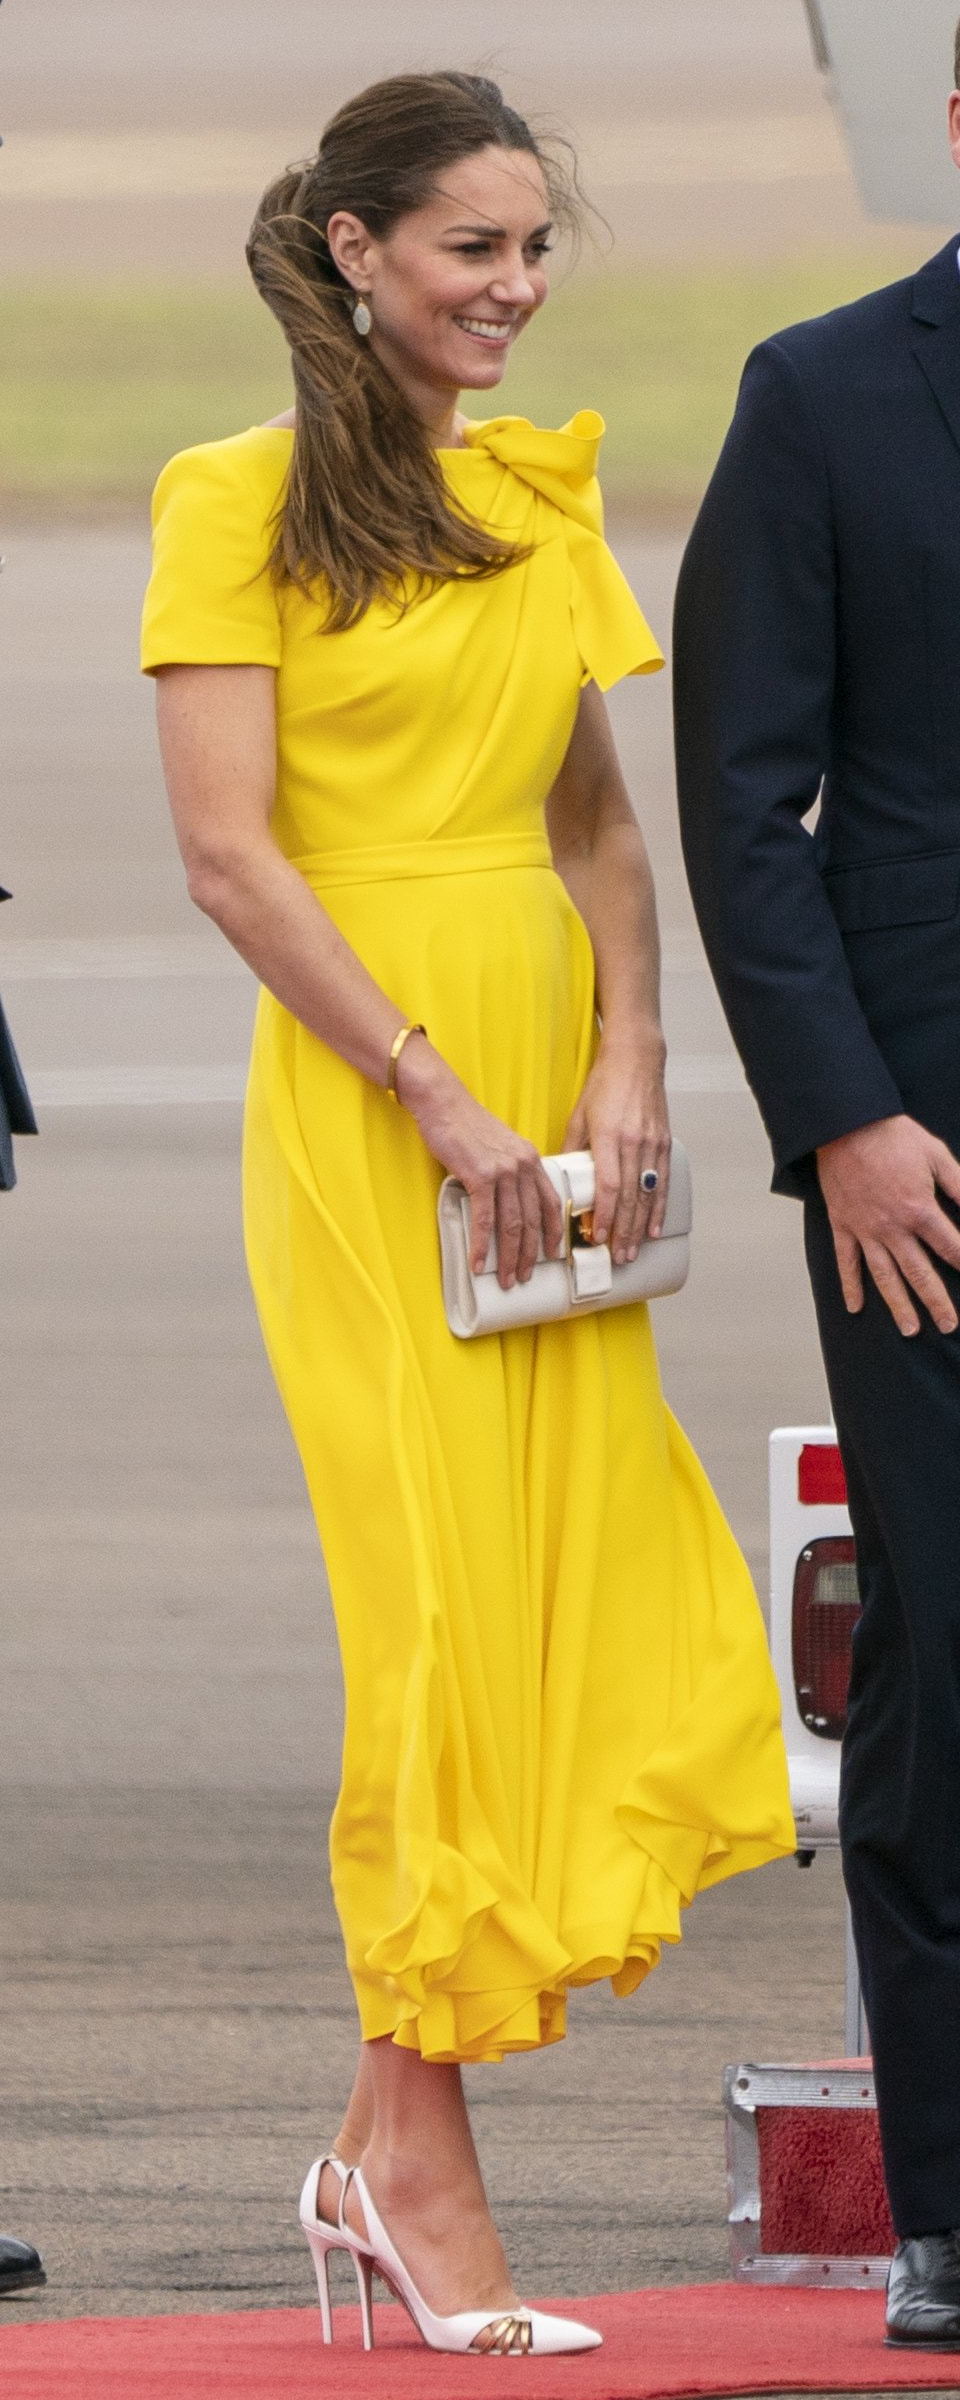 Sézane Celeste Mother of Pearl Earrings as seen on Kate Middleton, The Duchess of Cambridge.